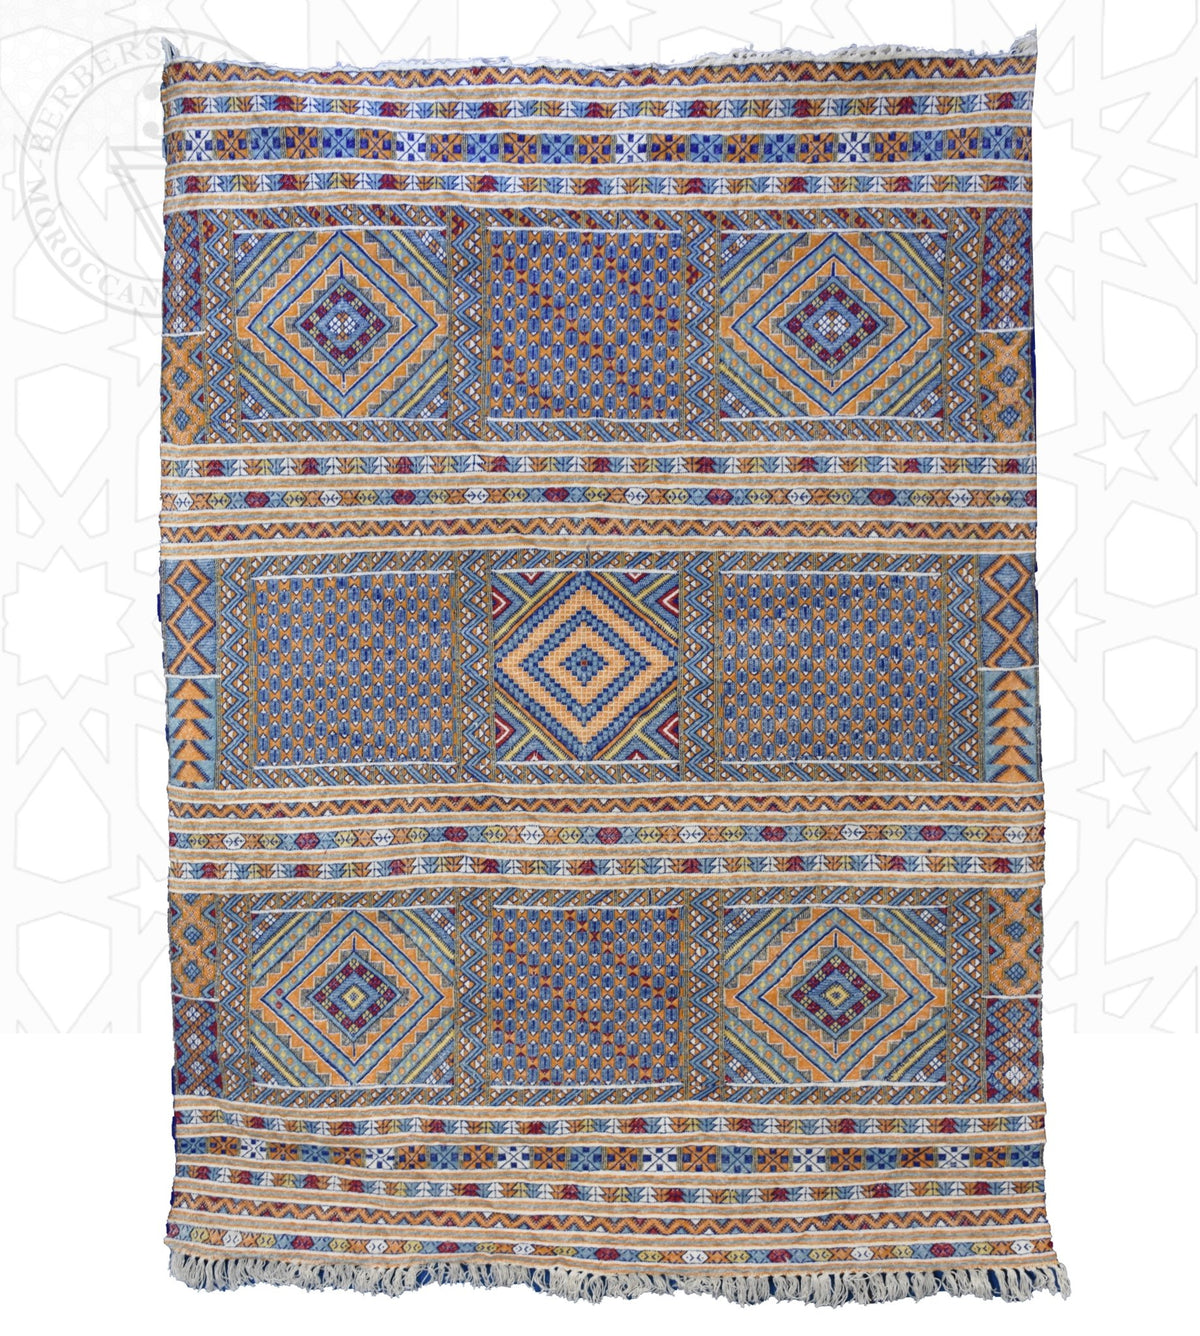 Flatweave kilim Moroccan rug - Berbers Market